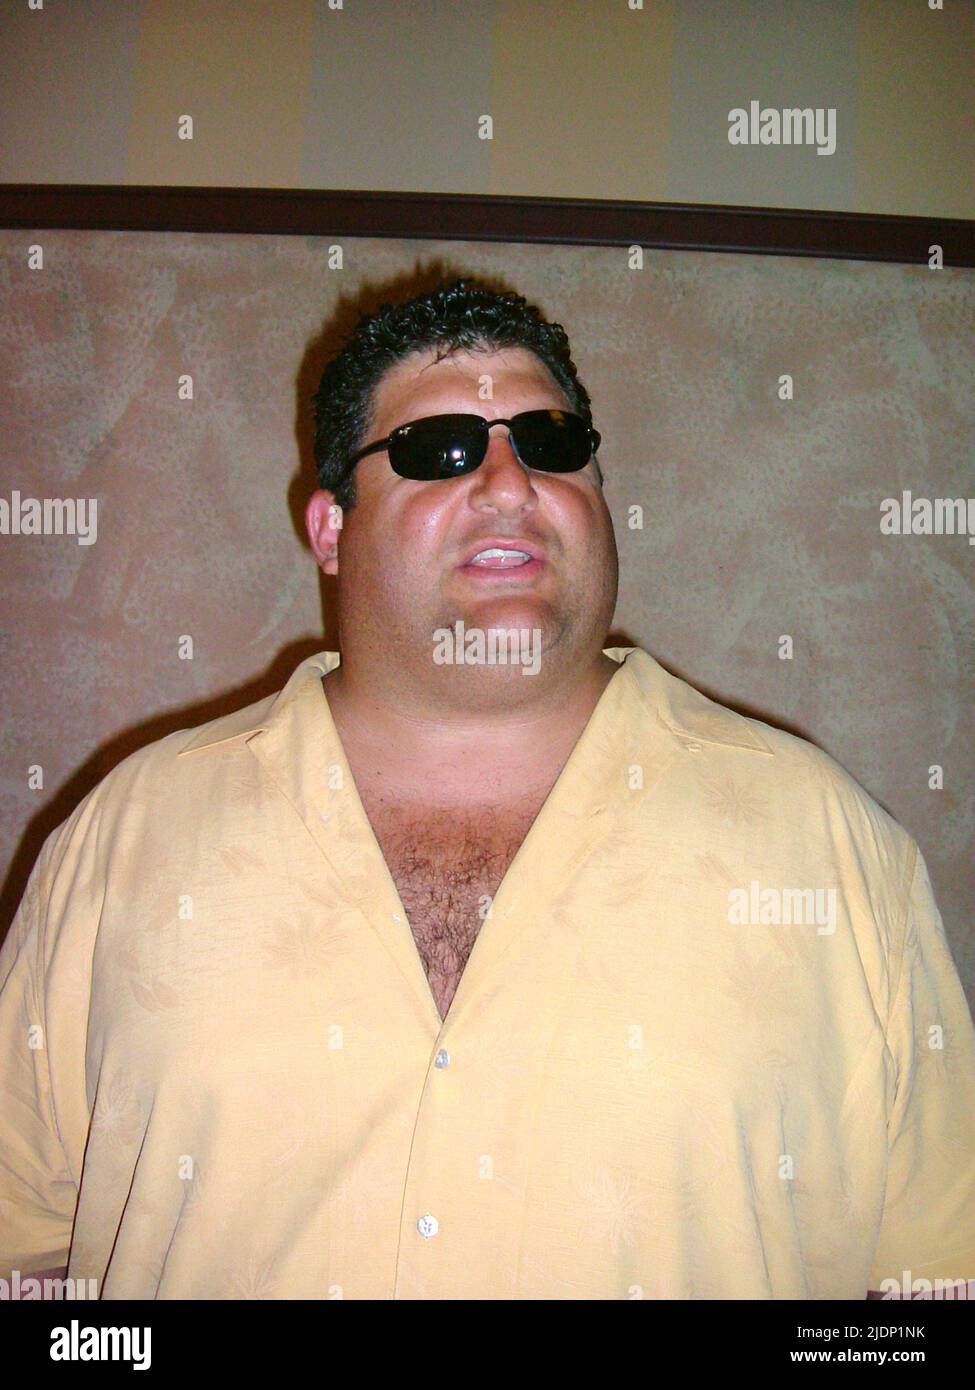 Miami Florida - 2003 - Tony Siragusa . Kredit: hoo-me.com/MediaPunch Stockfoto